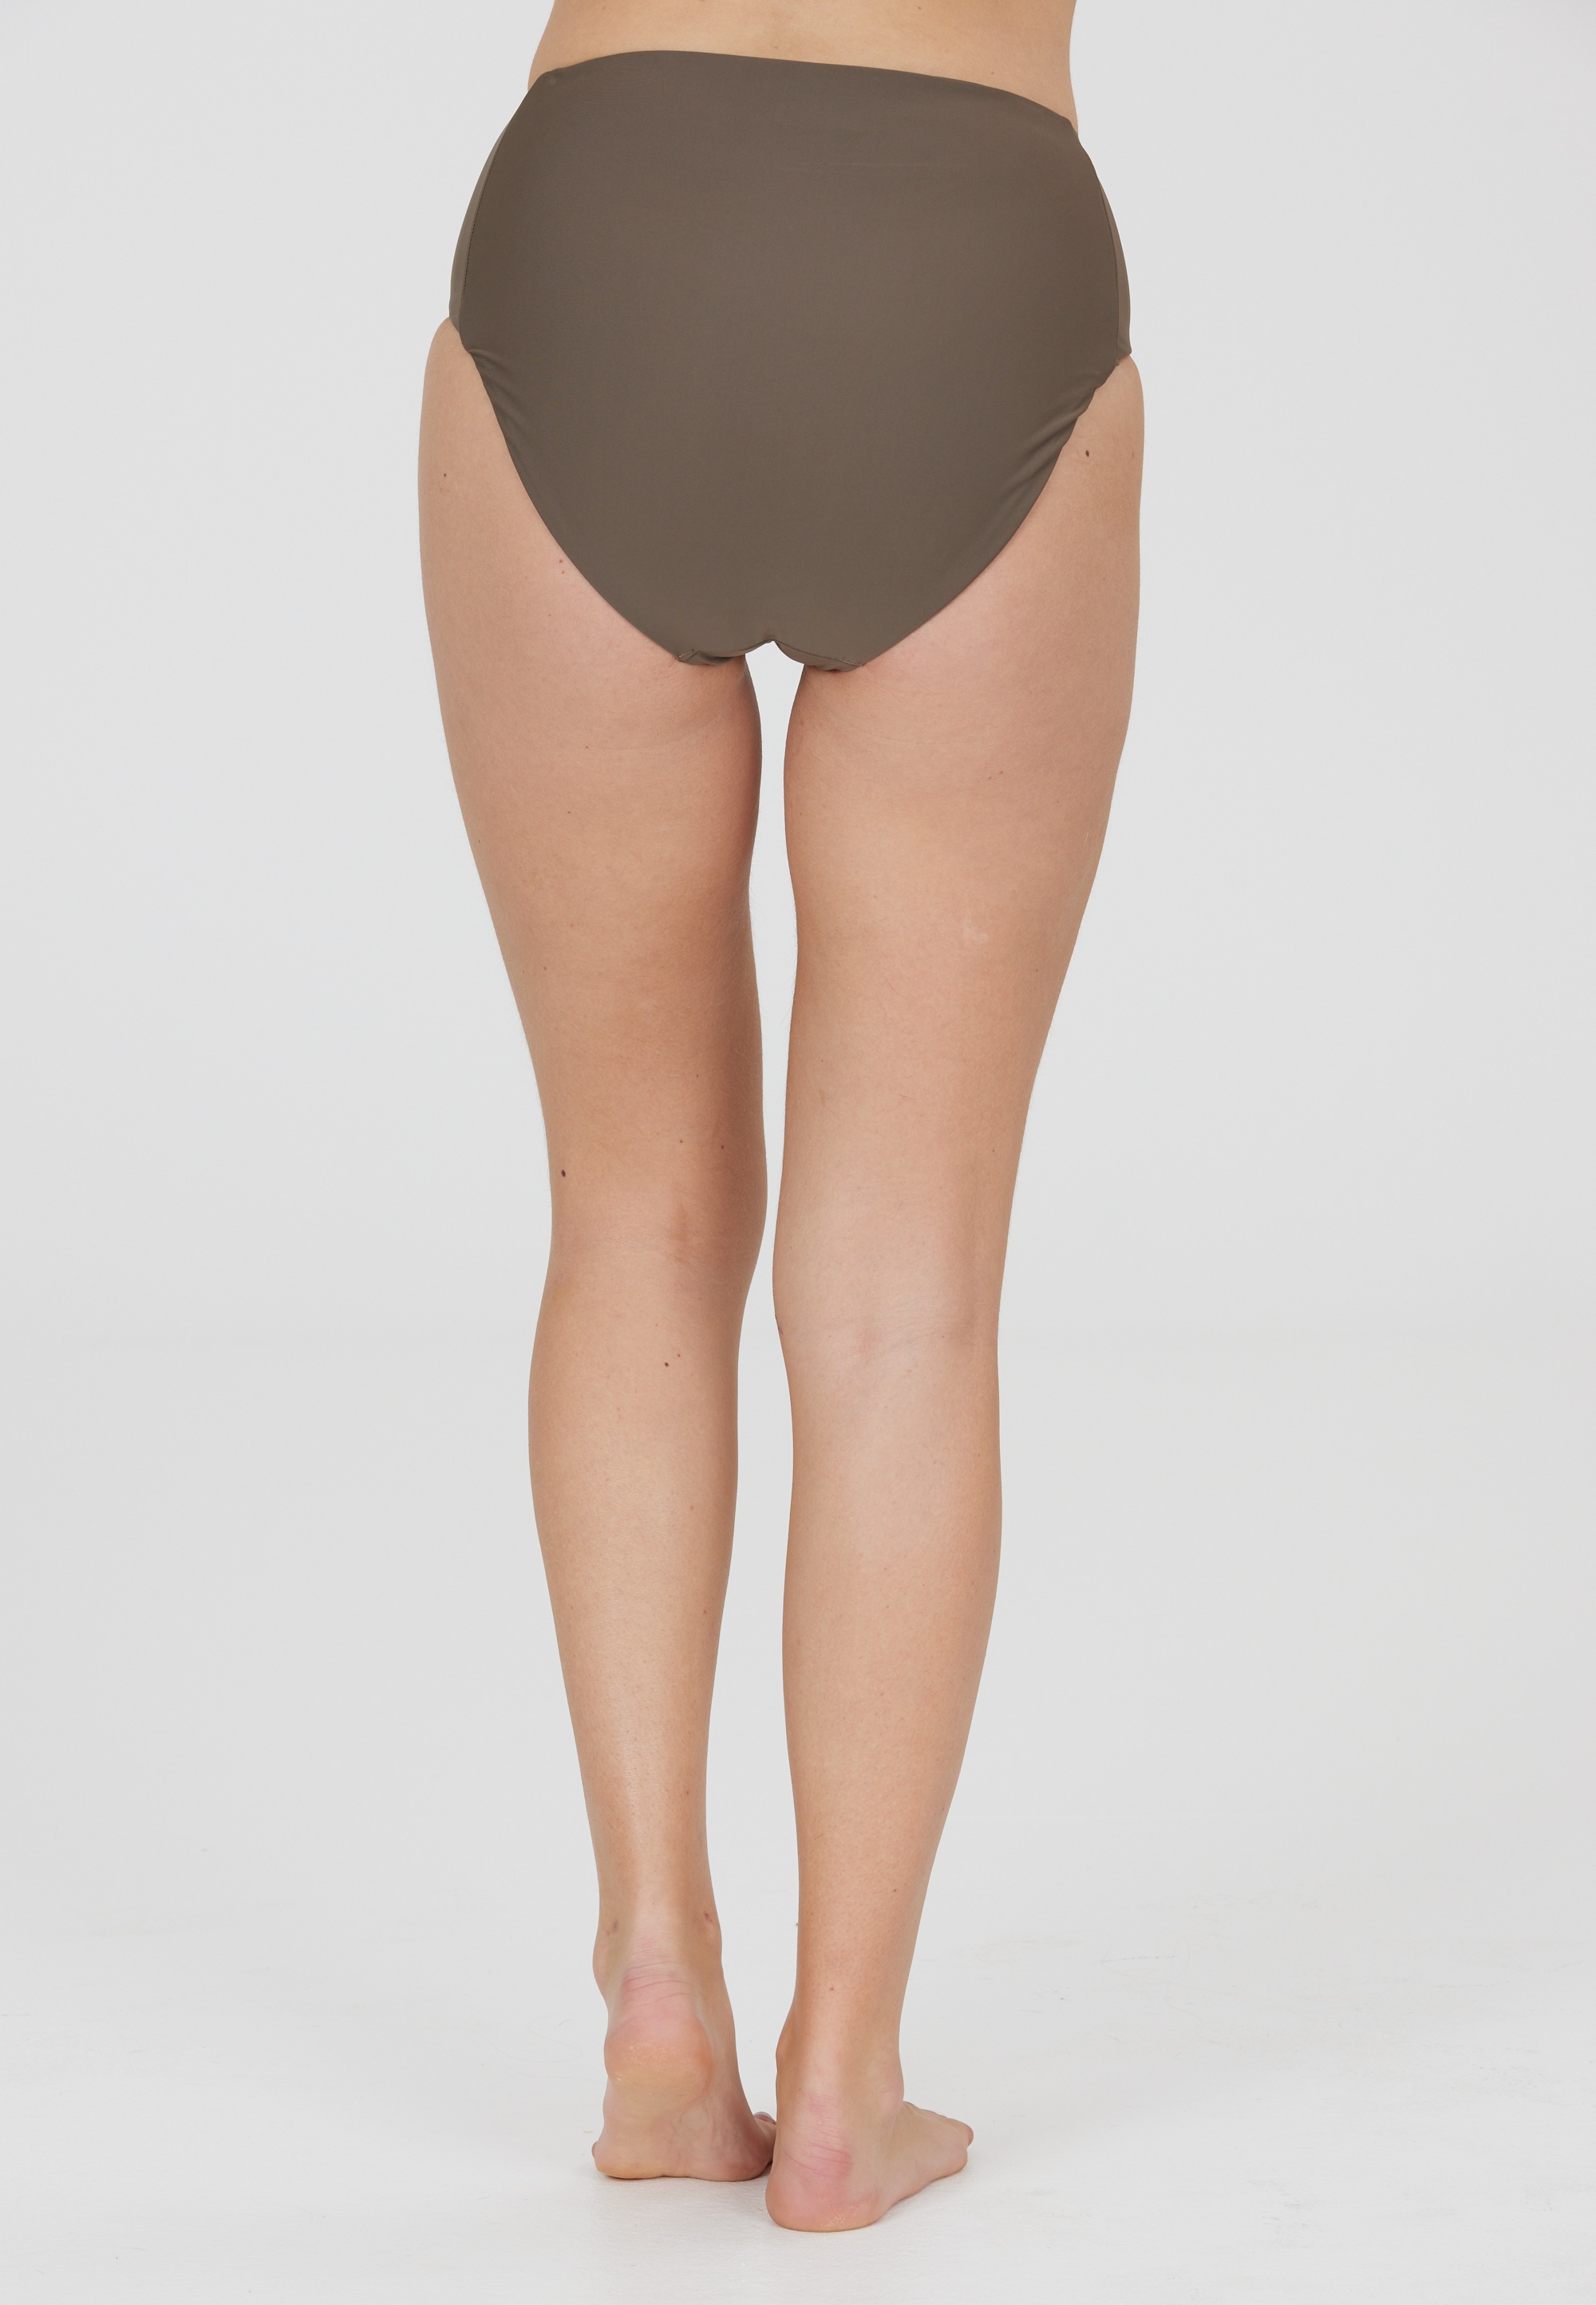 ATHLECIA Bikini-Hose »Aqumiee«, (1 St., Panty), mit Quick Dry-Funktion